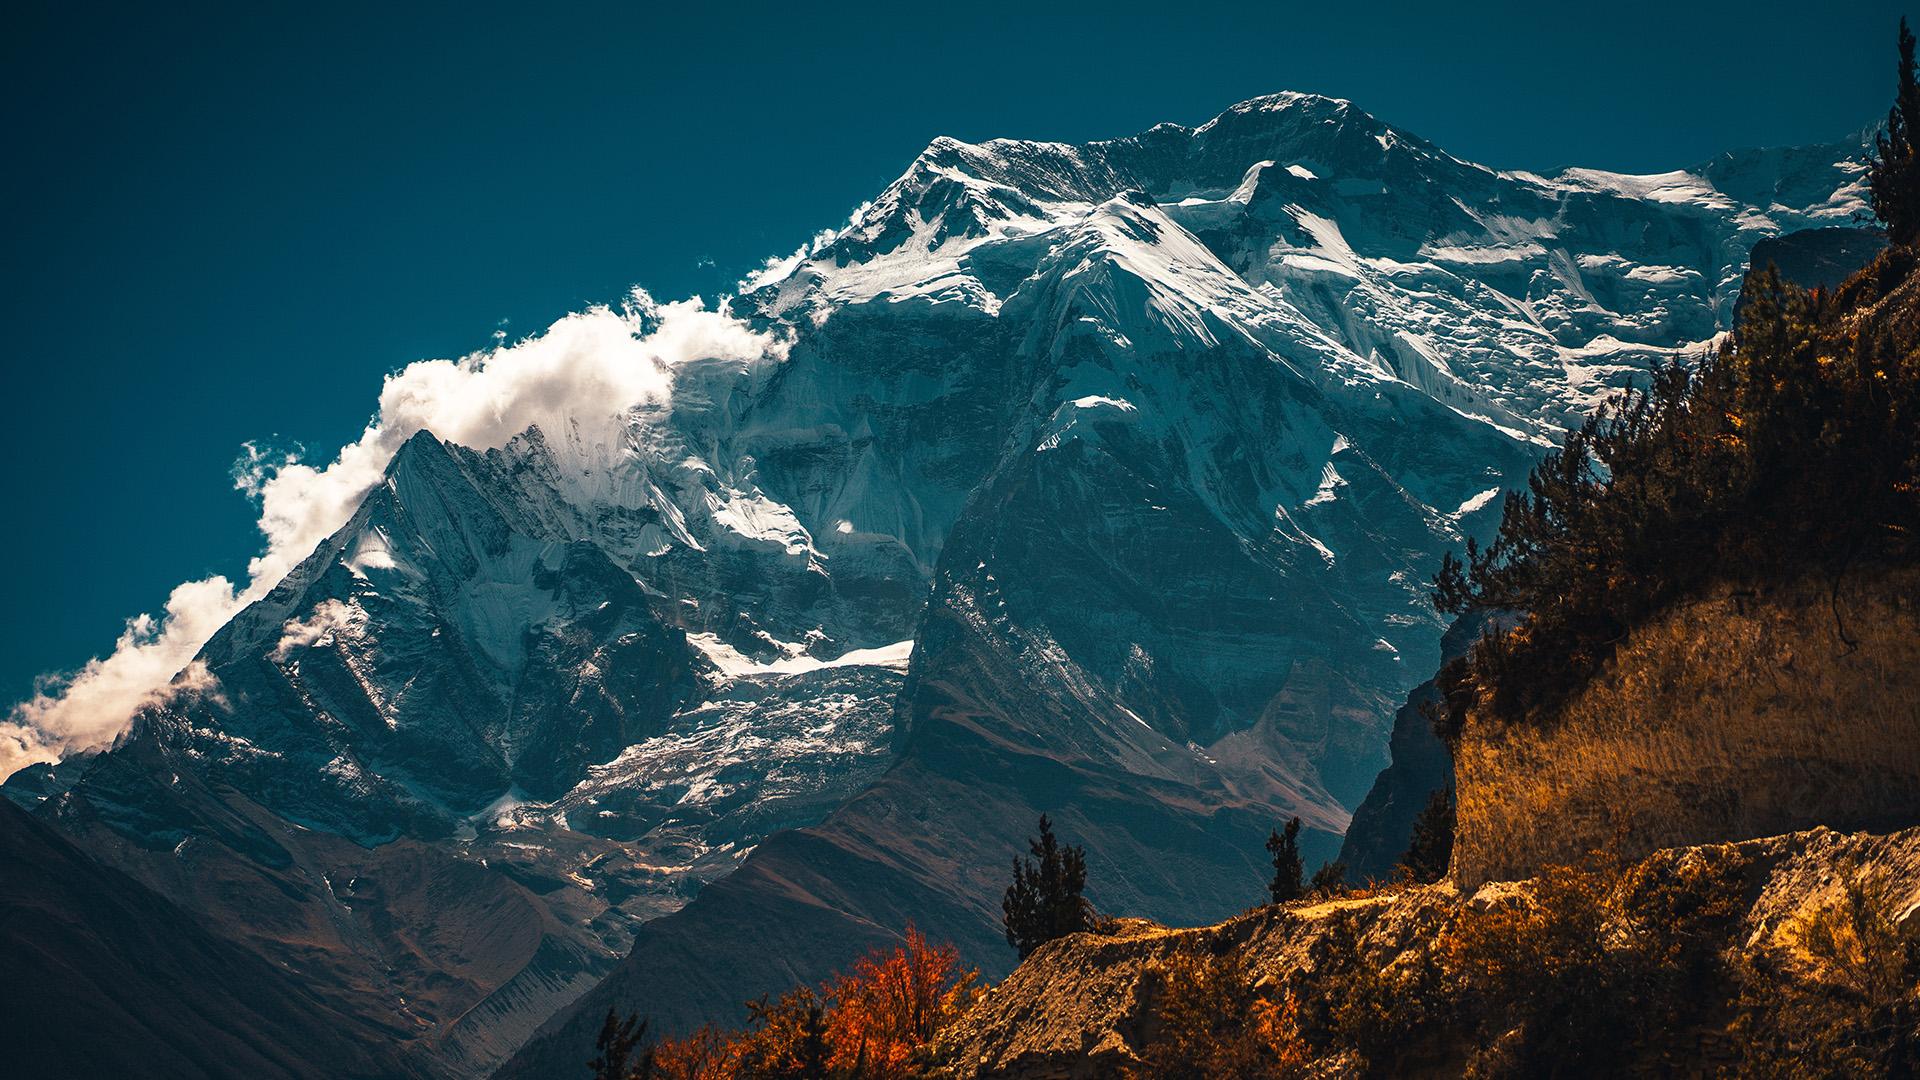 Himalaya mountains, Bhutan. Image credit: Raimond Klavins